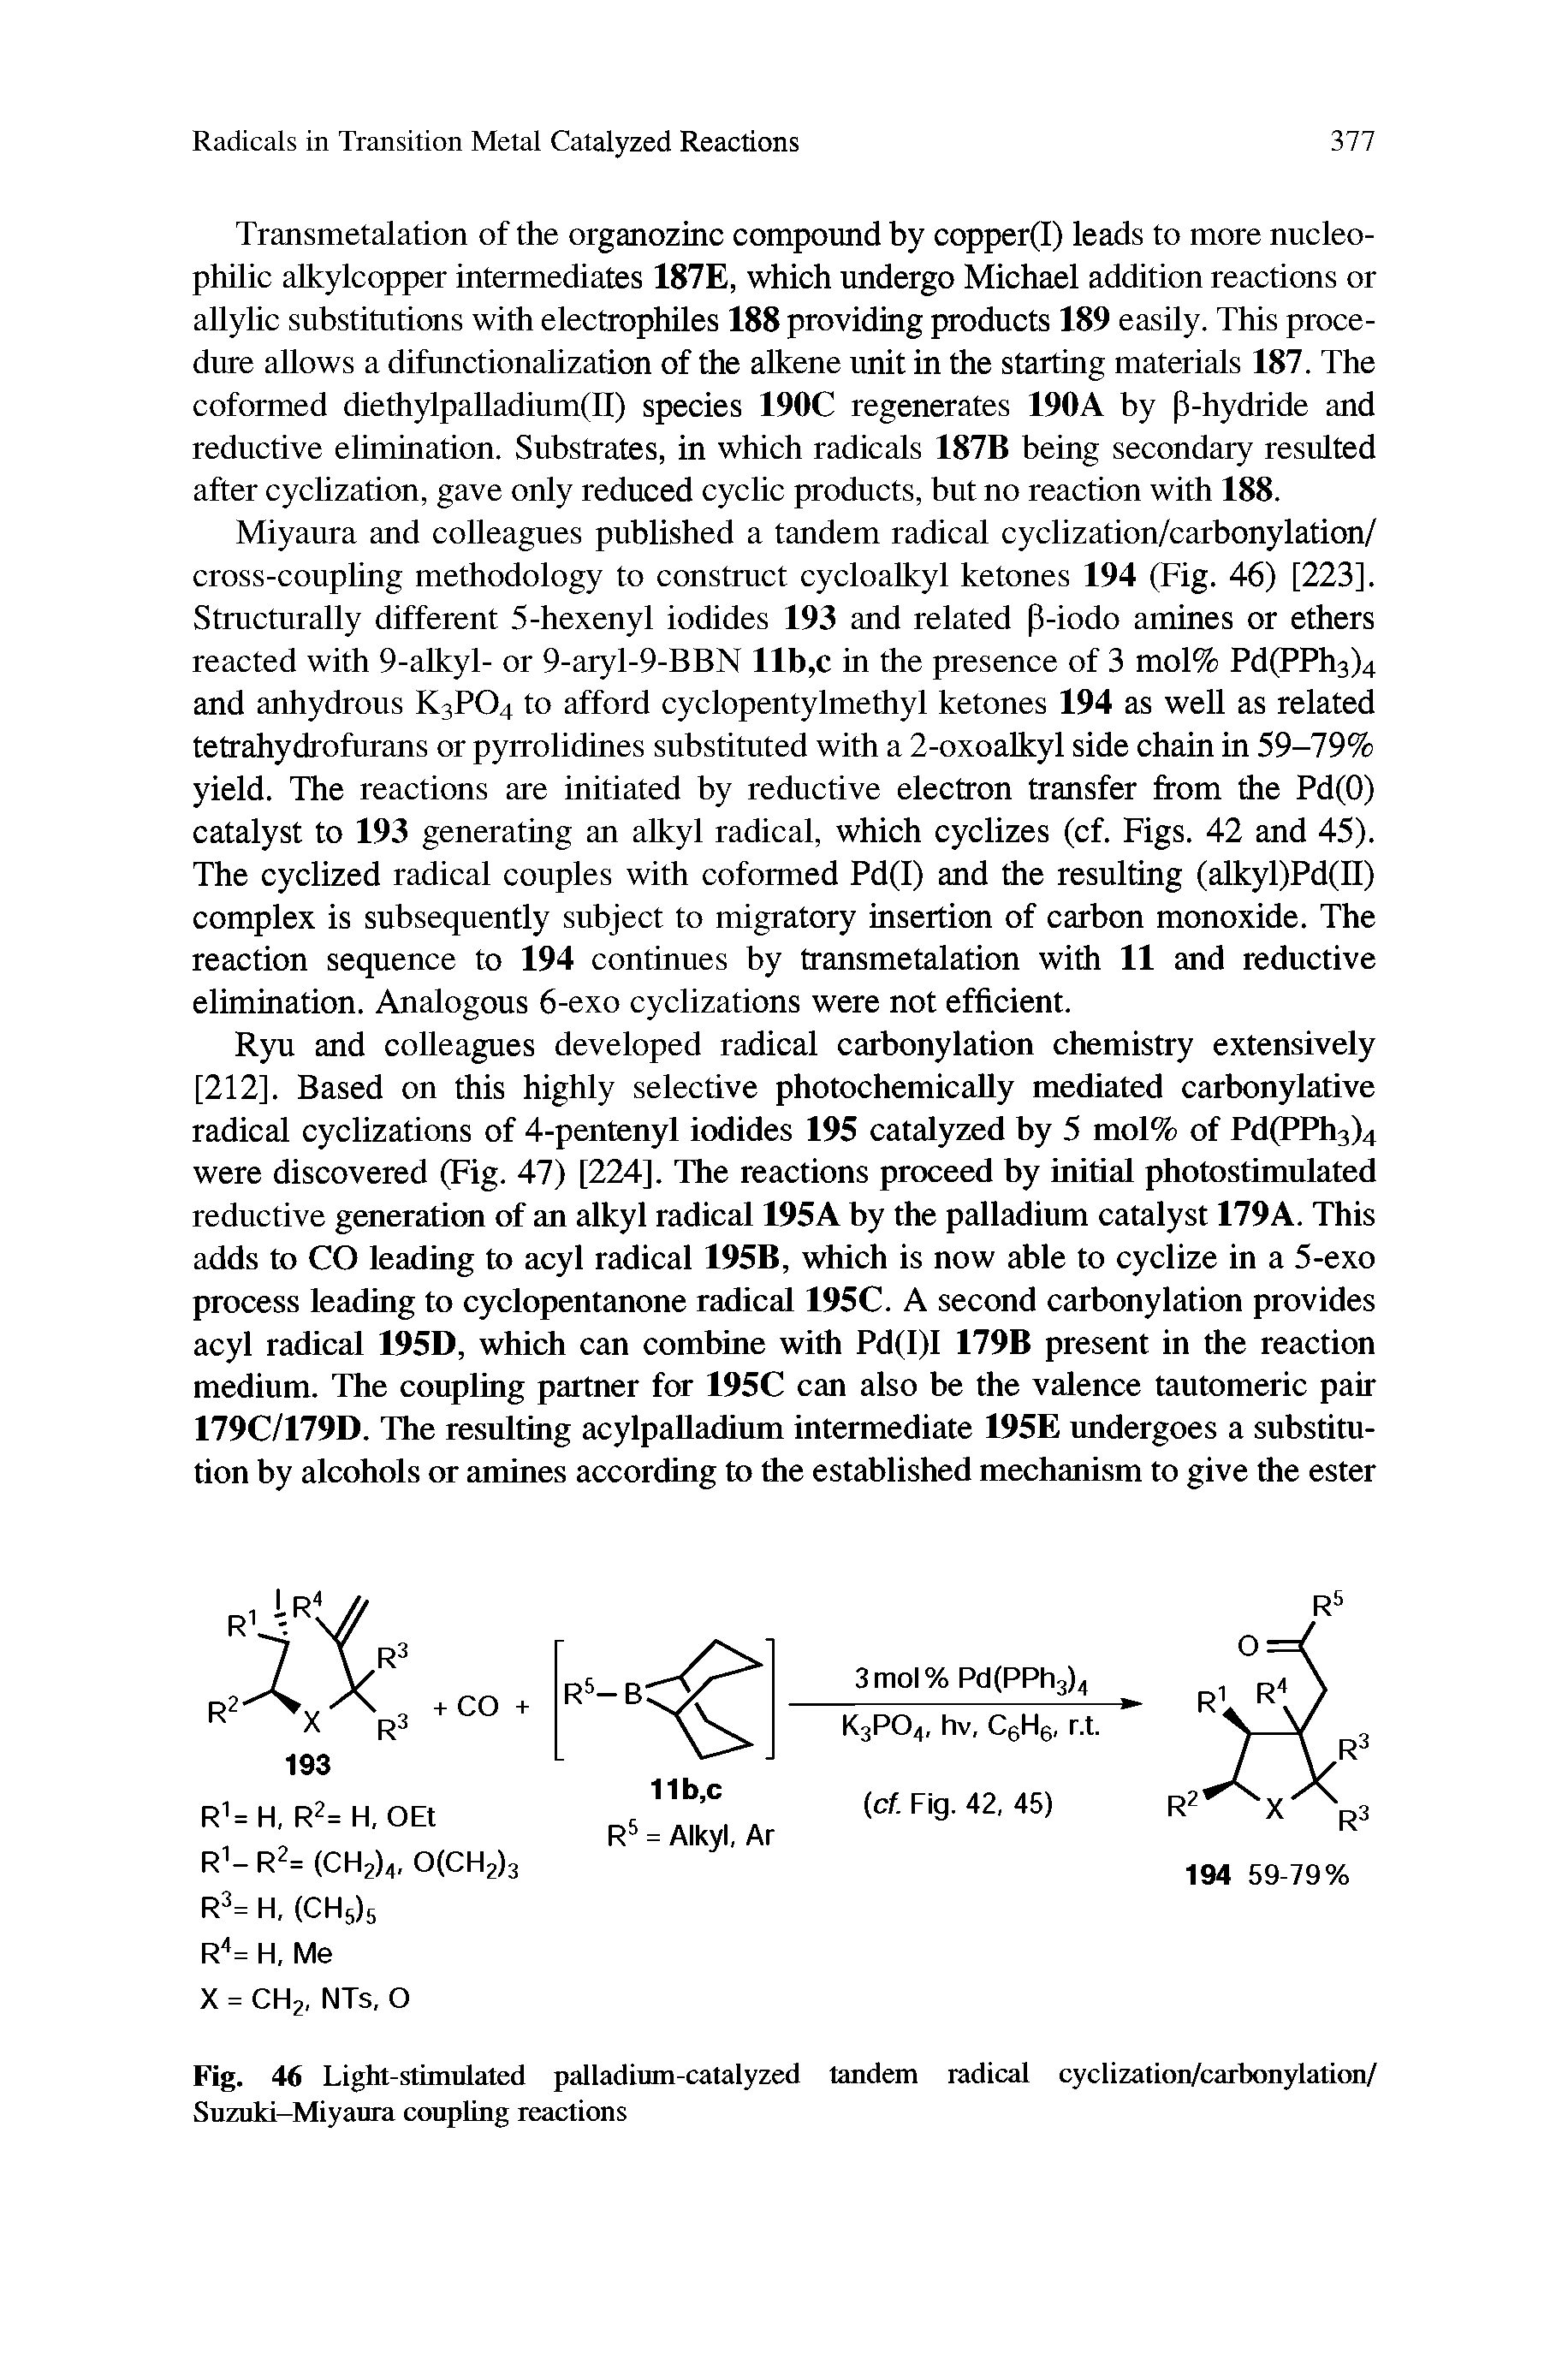 Fig. 46 Light-stimulated palladium-catalyzed tandem radical cyclization/carbonylation/ Suzuki-Miyaura coupling reactions...